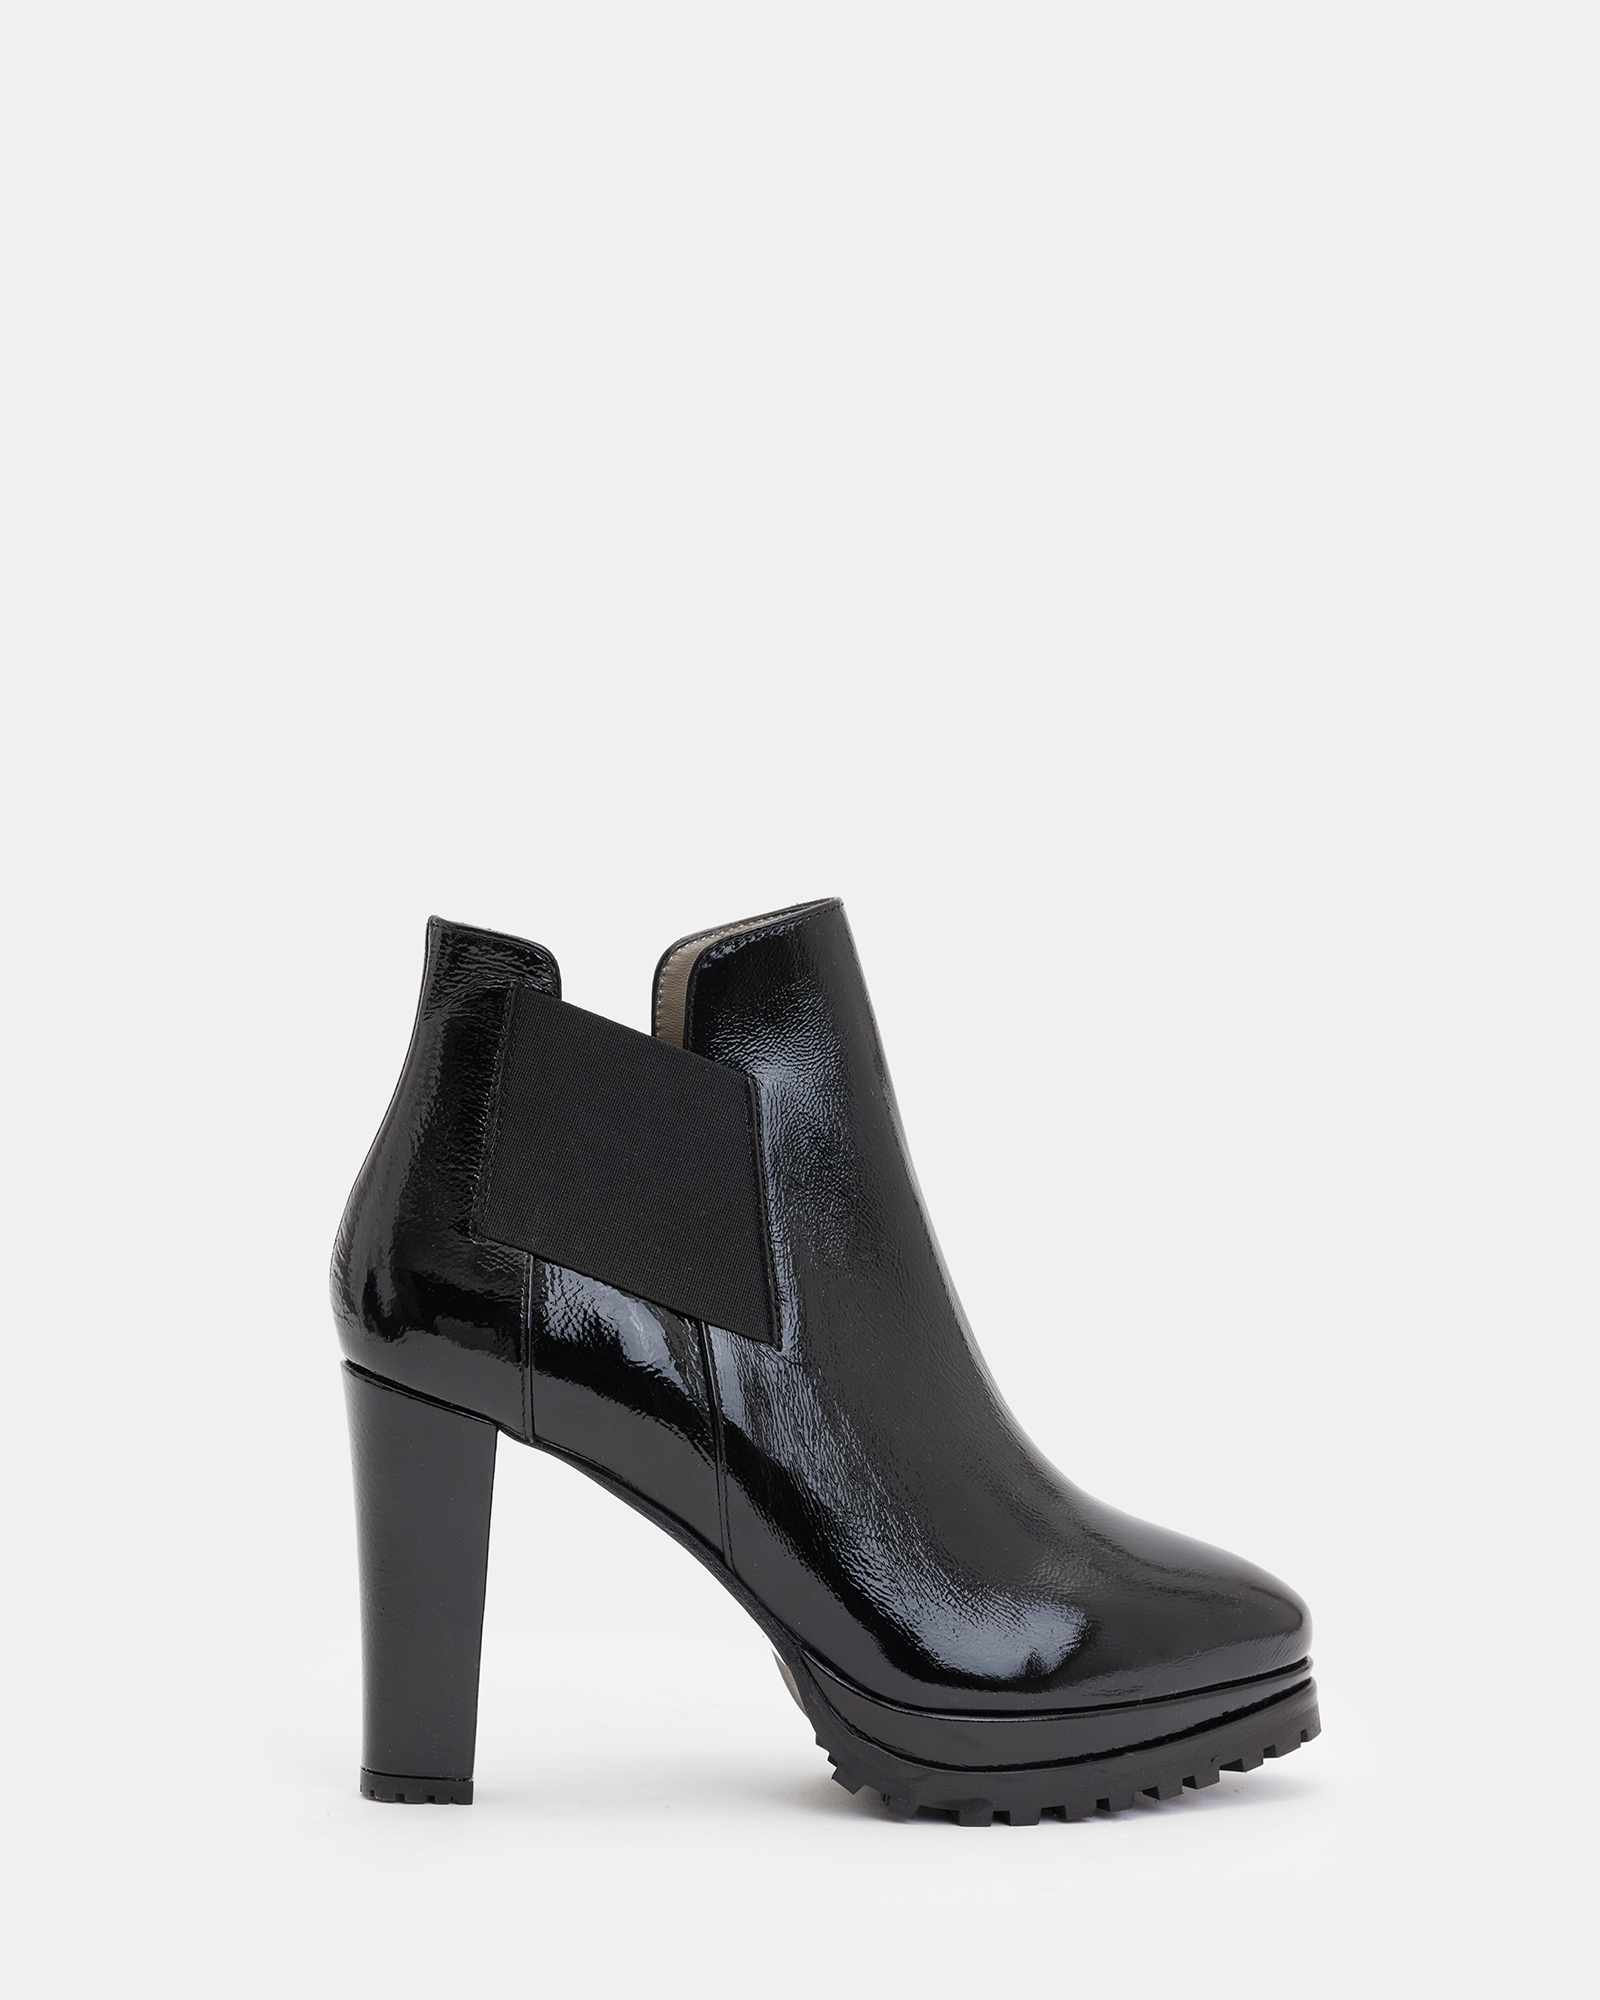 AllSaints Sarris Patent Leather Block Heel Boots,, Black